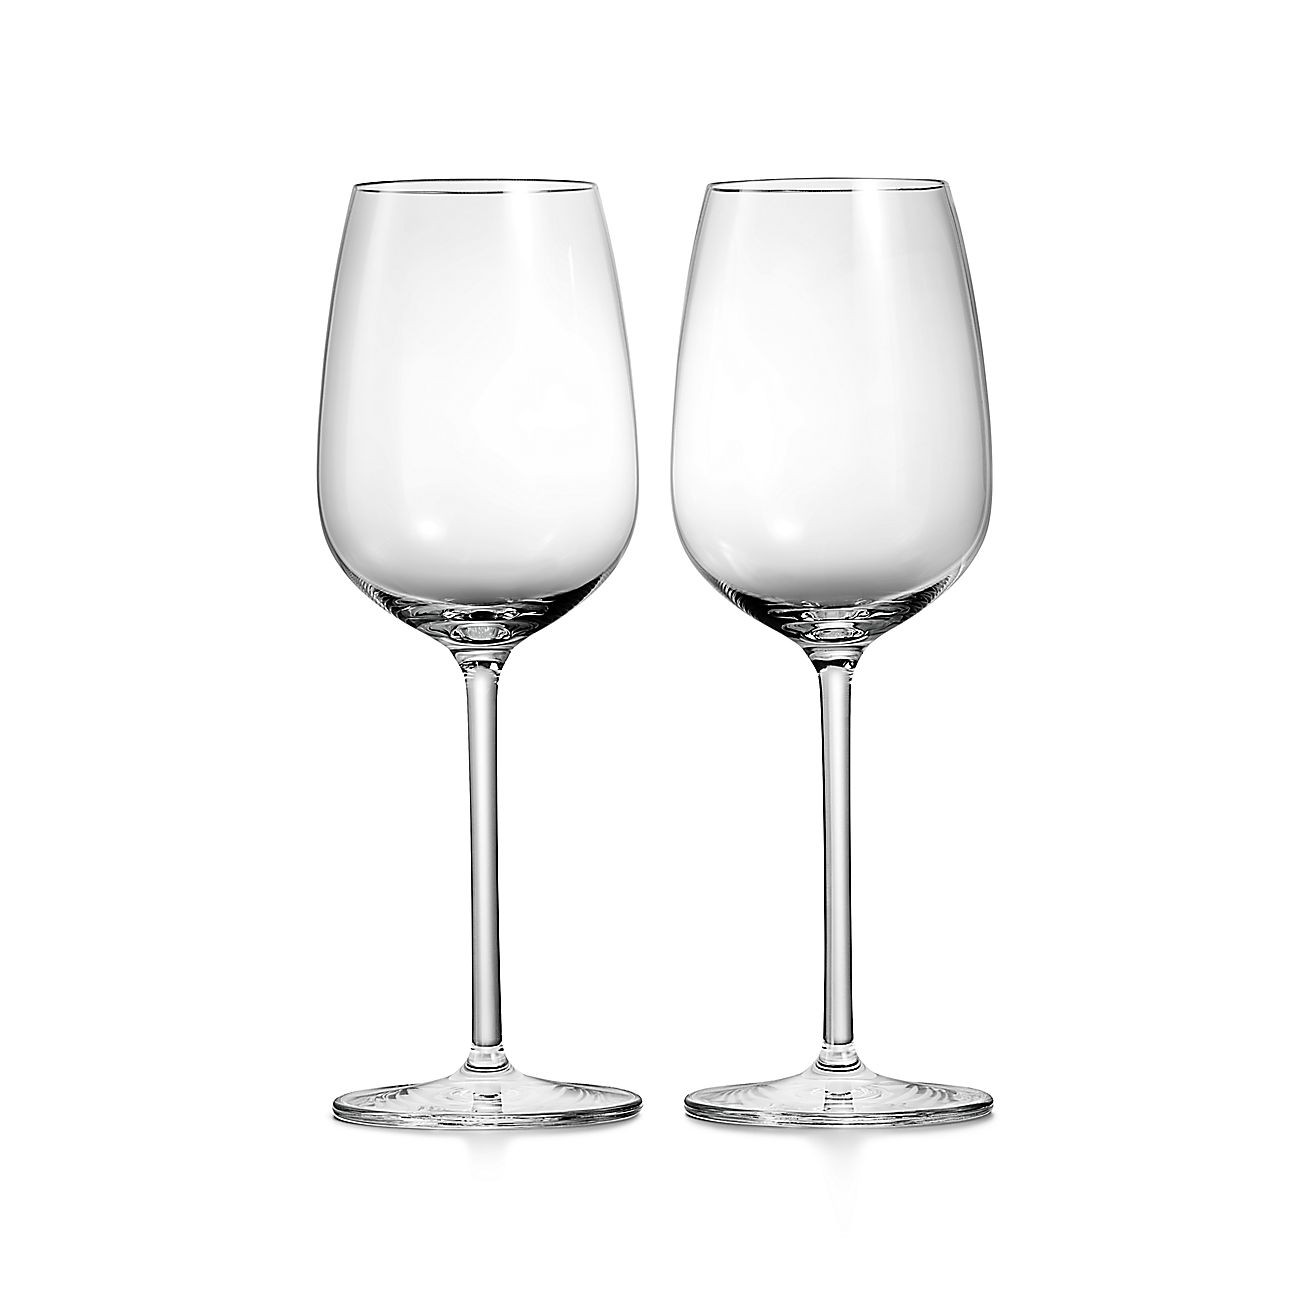 https://media.tiffany.com/is/image/Tiffany/EcomItemL2/tiffany-home-essentialsall-purpose-white-wine-glasses-70223716_1055262_ED.jpg?&op_usm=2.0,1.0,6.0&$cropN=0.1,0.1,0.8,0.8&defaultImage=NoImageAvailableInternal&